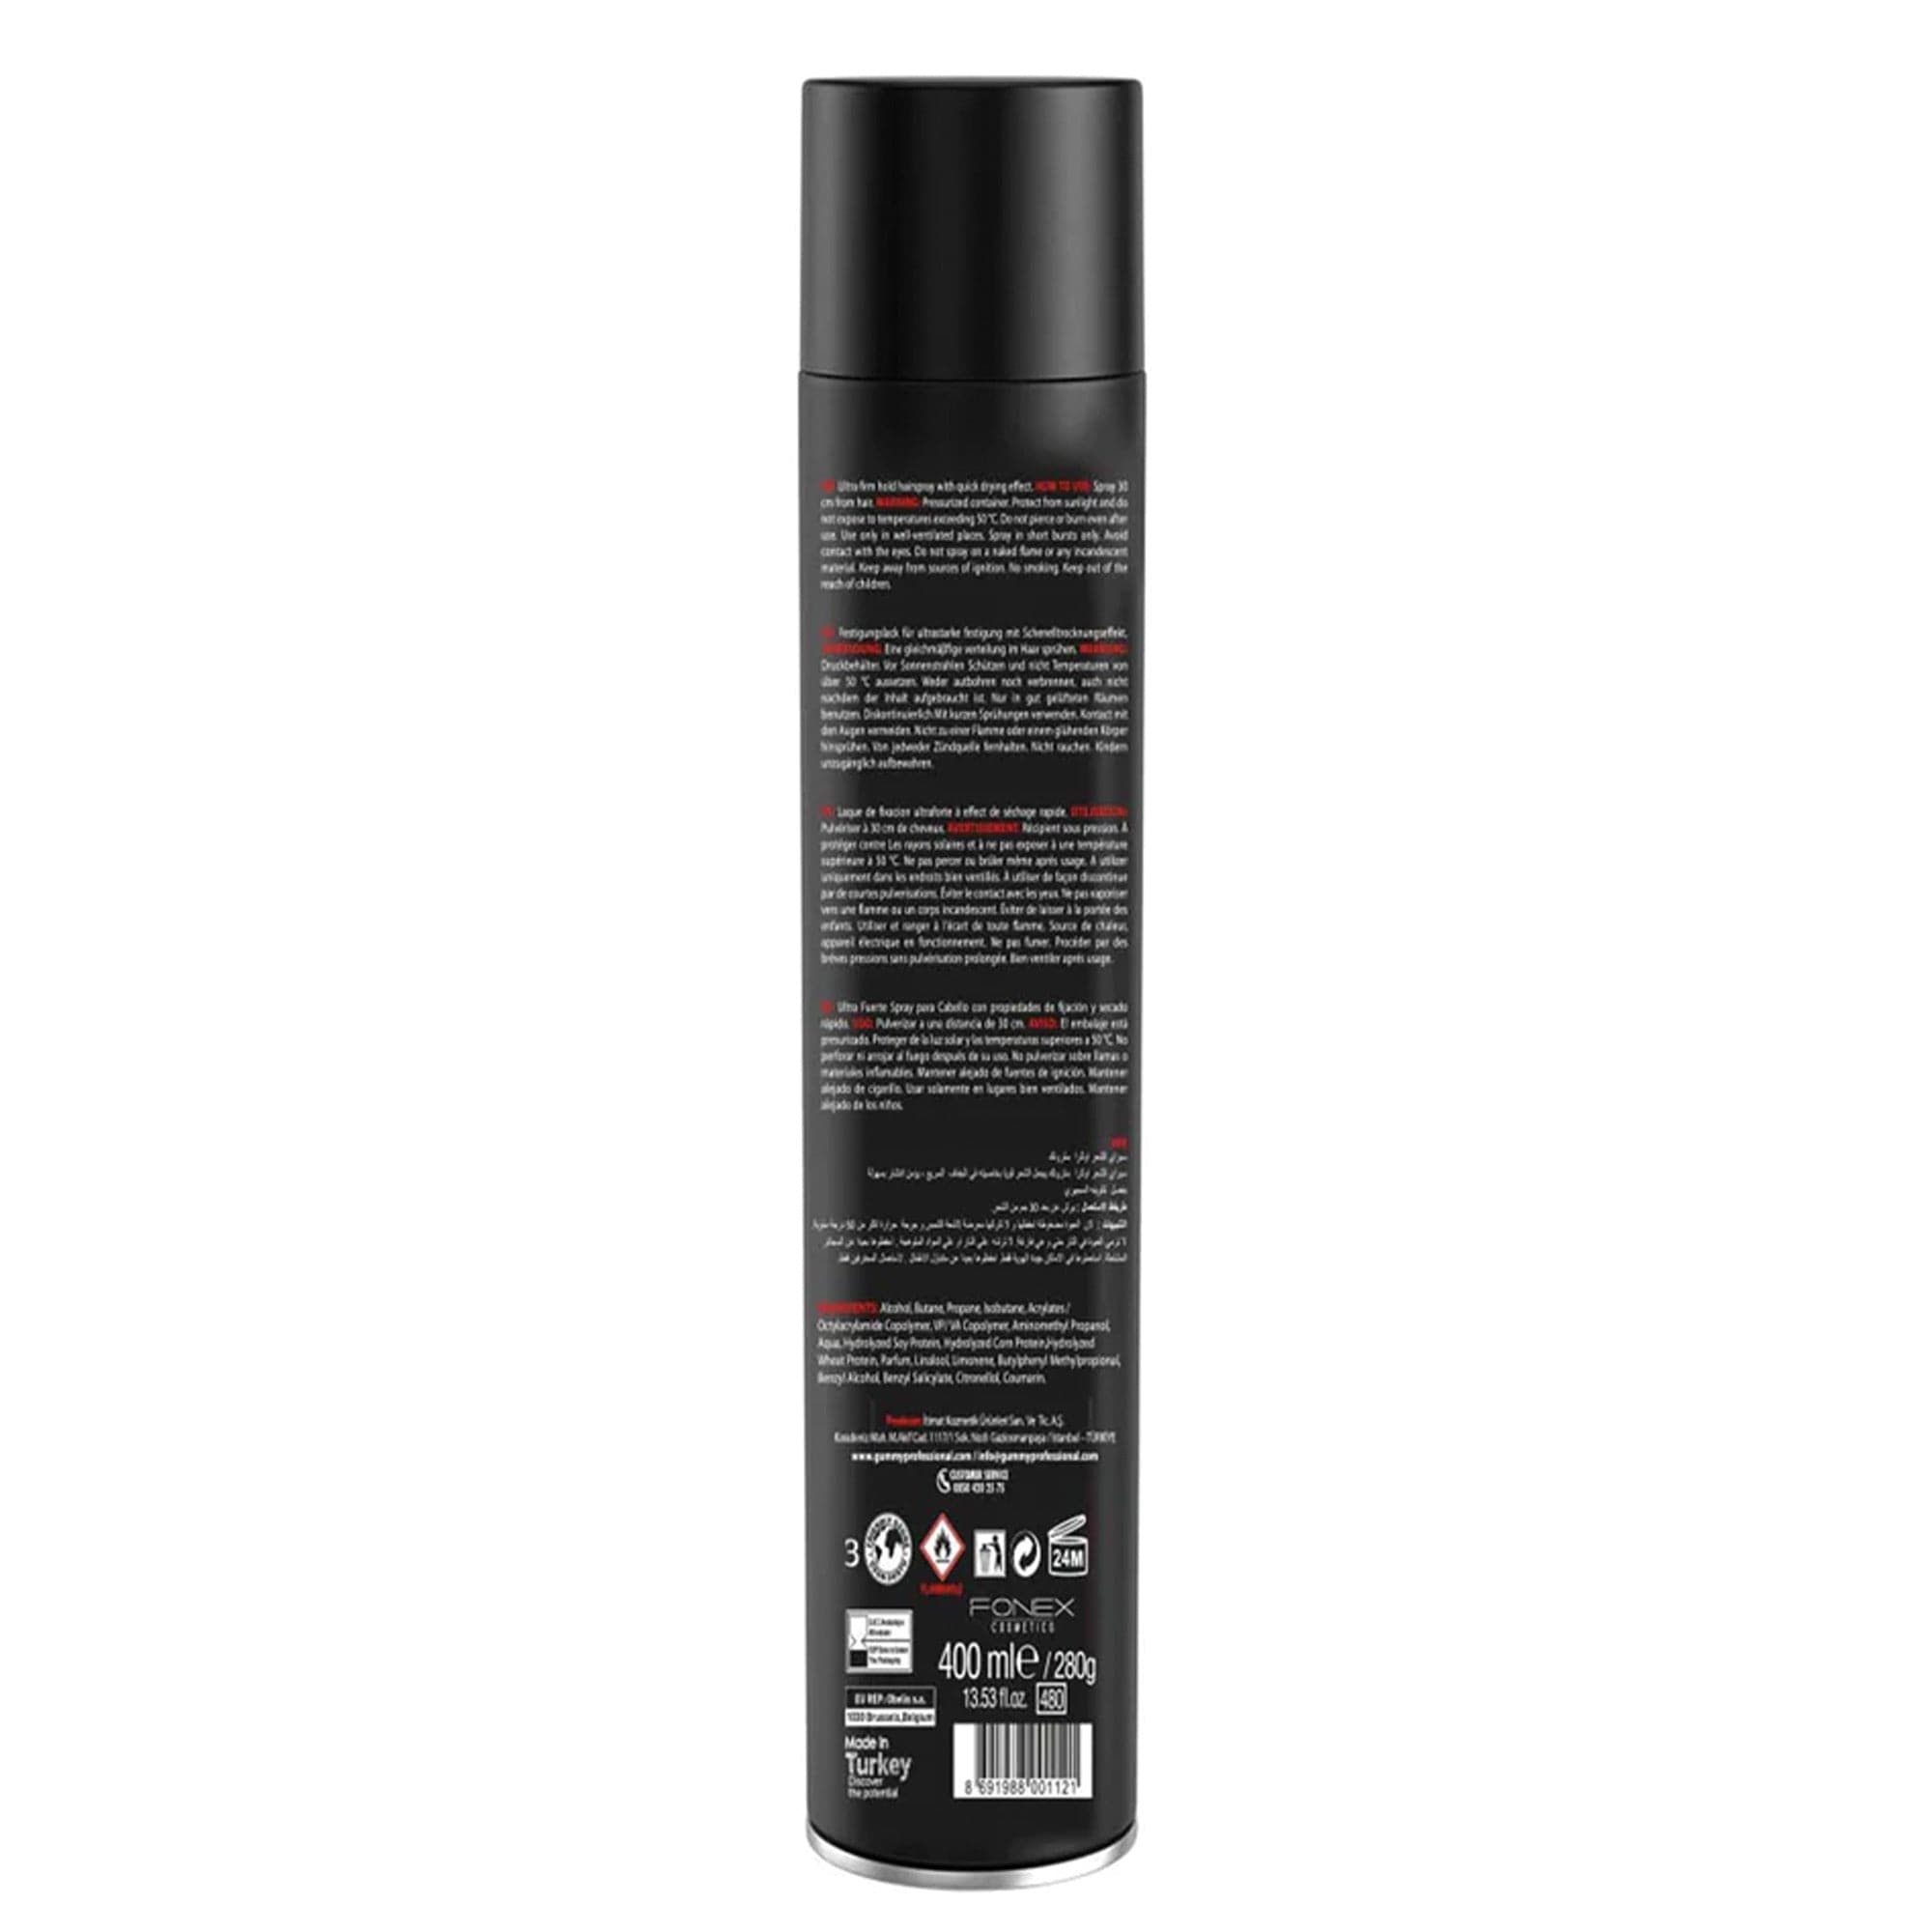 Gummy - Keratin Hair Spray Ultra Strong Hold Factor 400ml